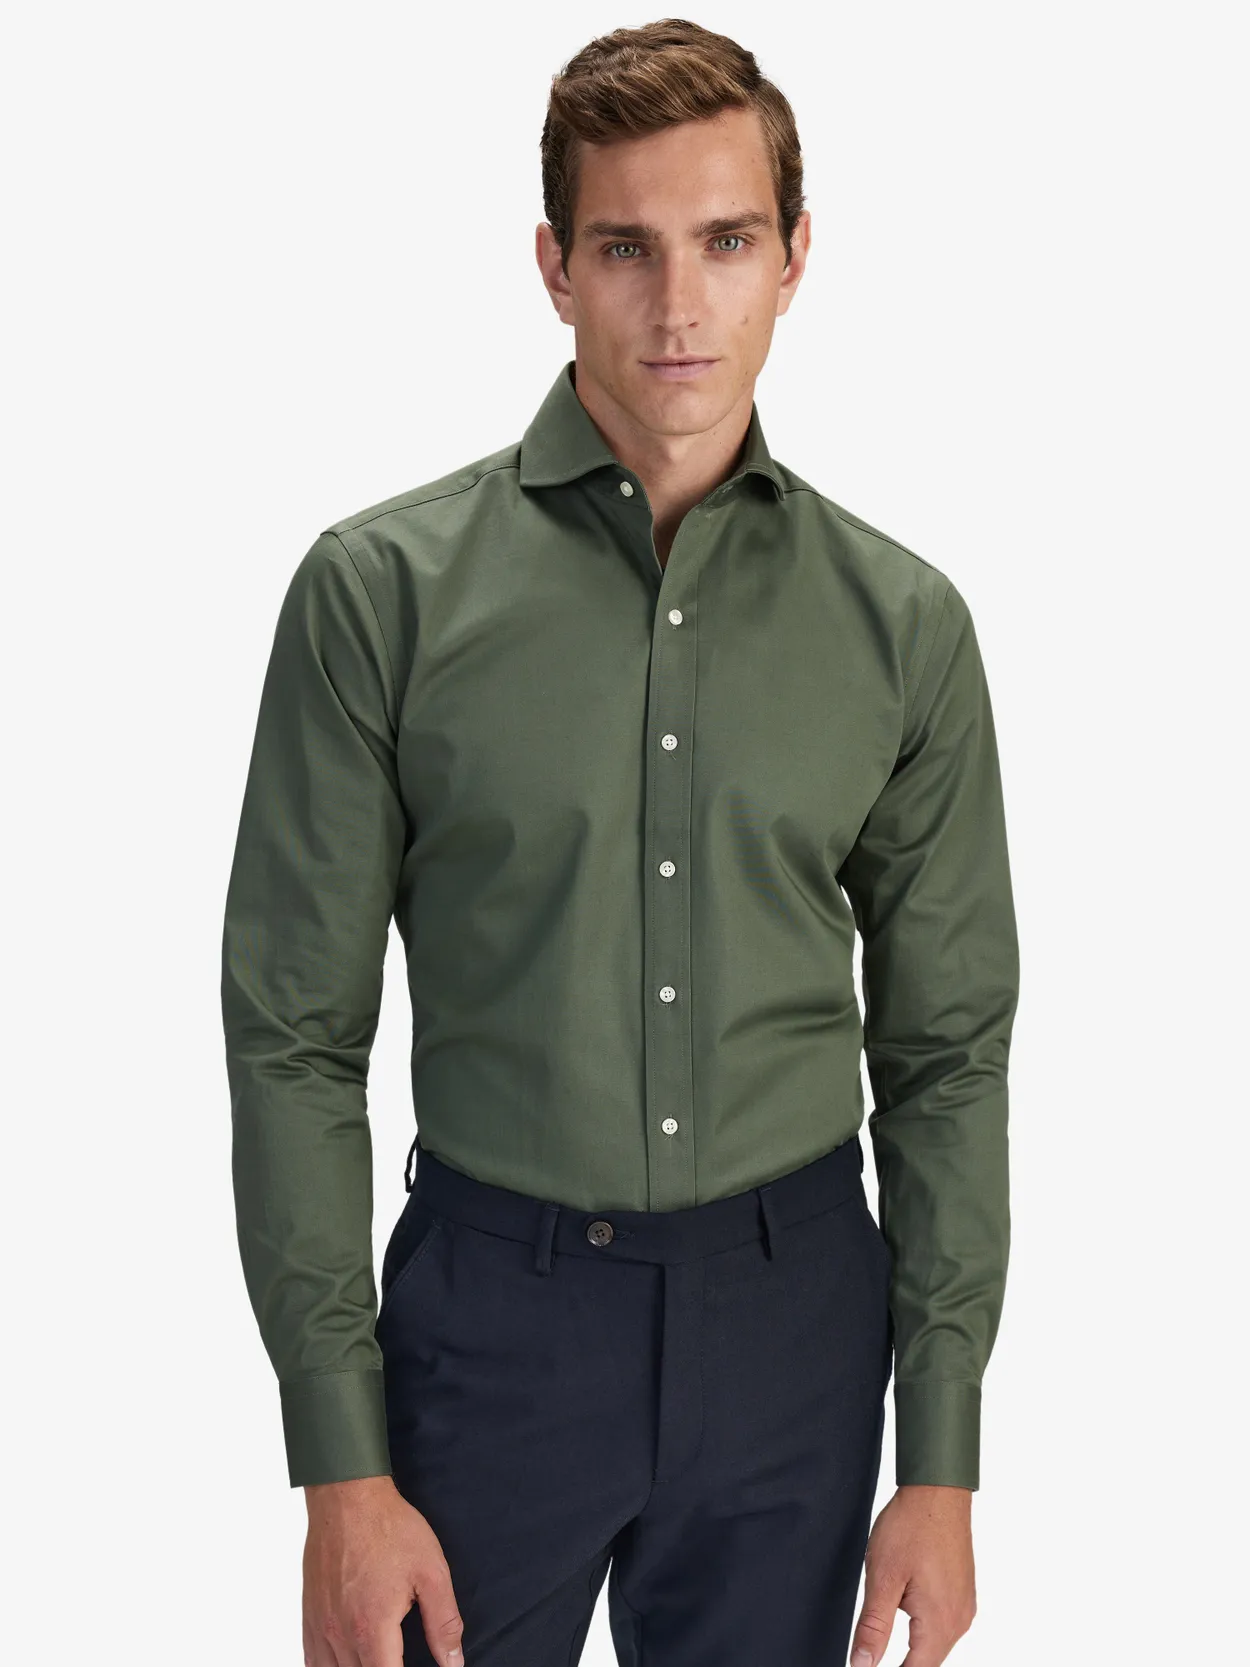 Olive Green Stretch Shirt